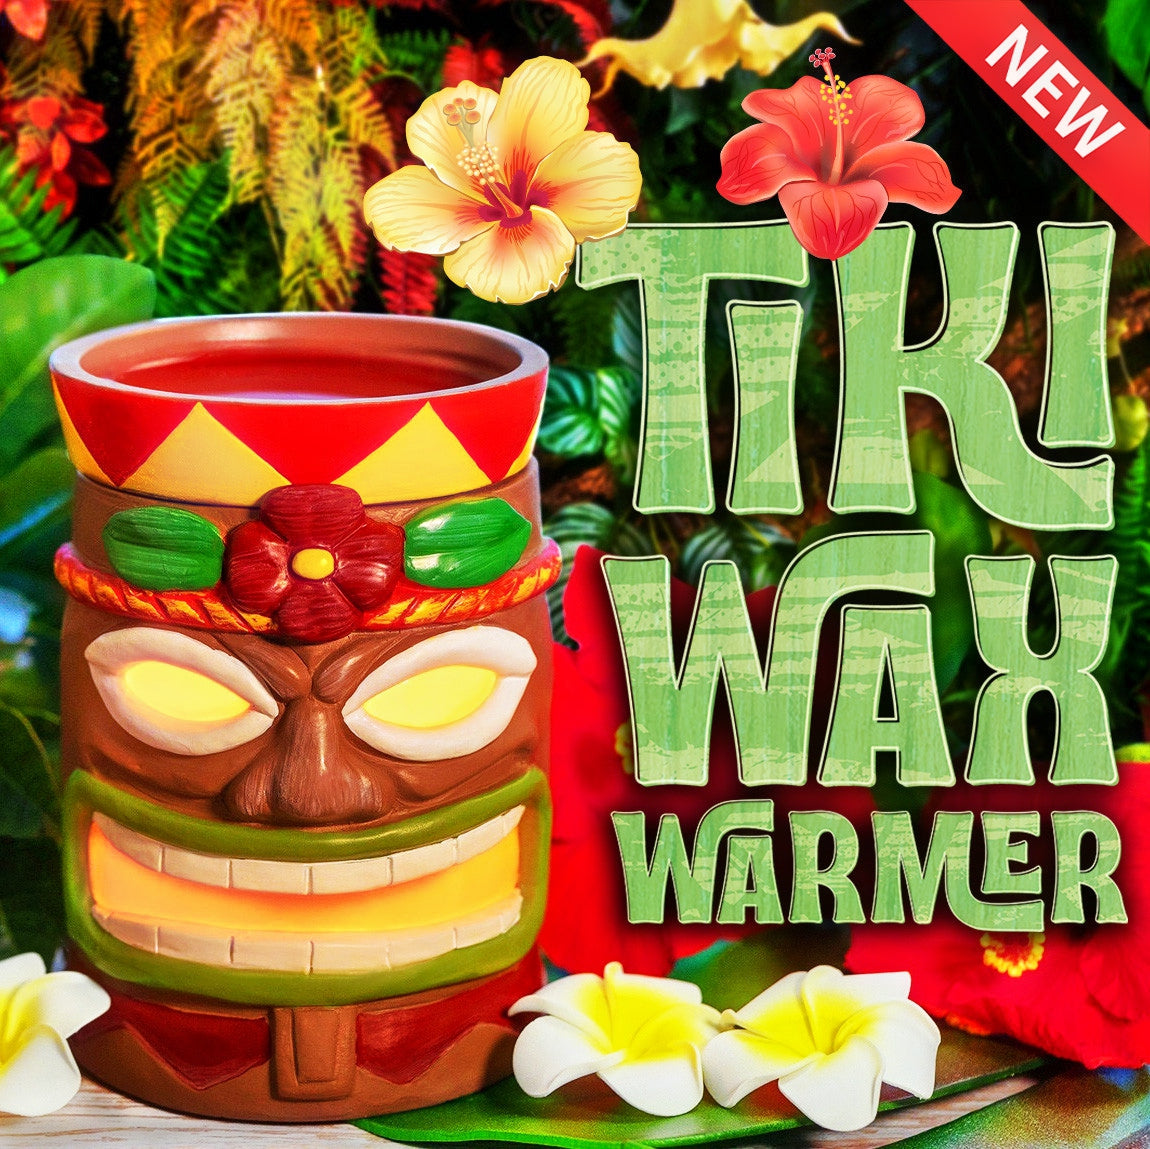 Tiki Wax Warmer